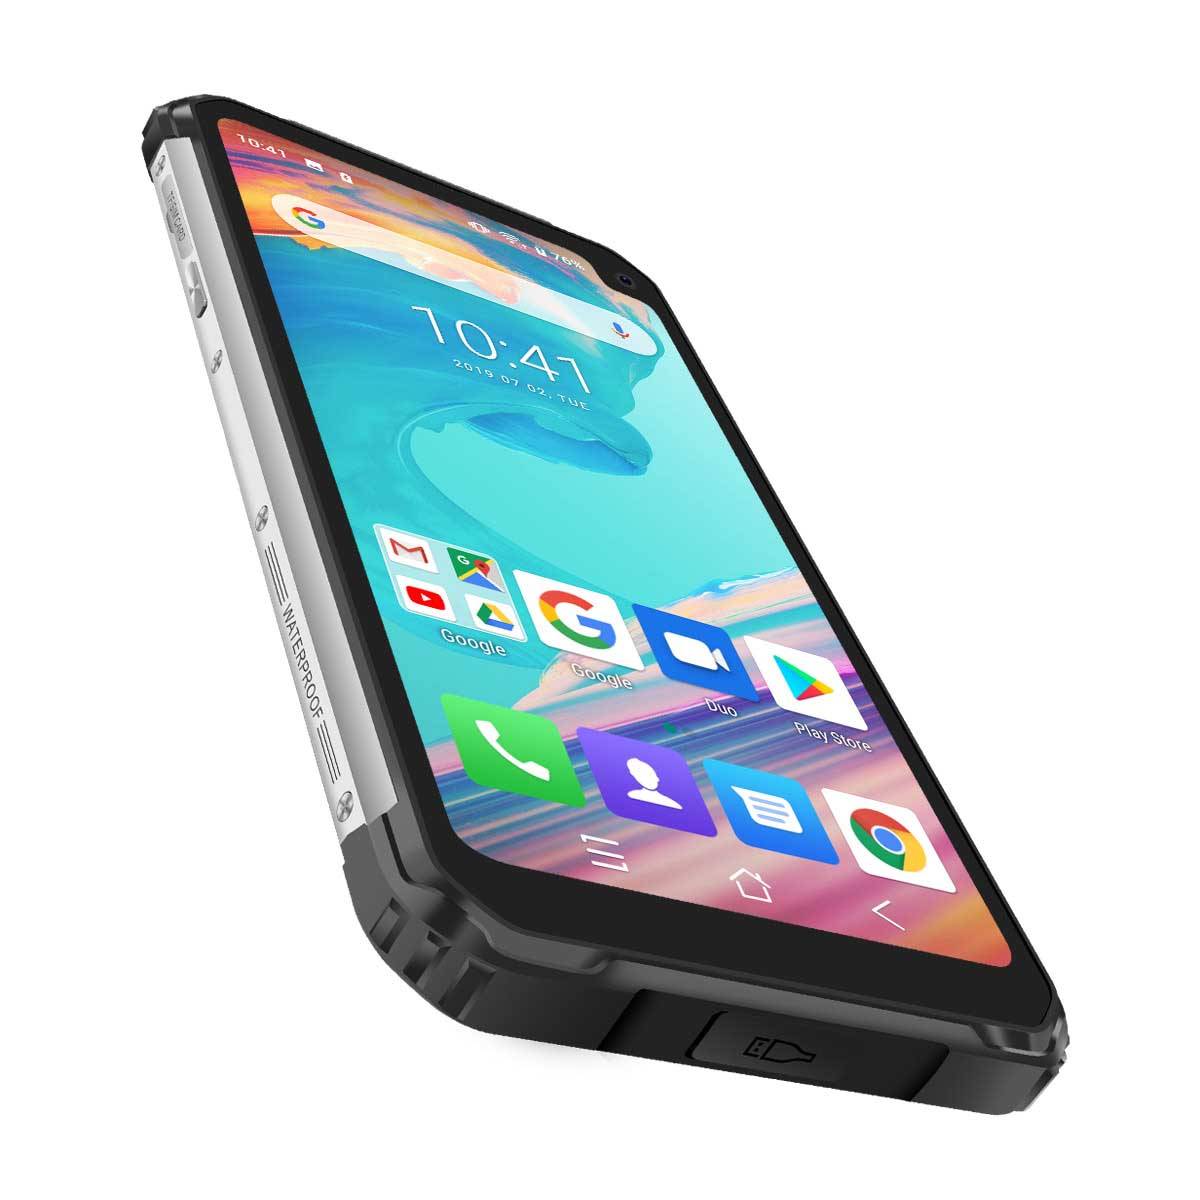 Samsung, LG, Blackview: siete celulares que resisten caídas y golpes